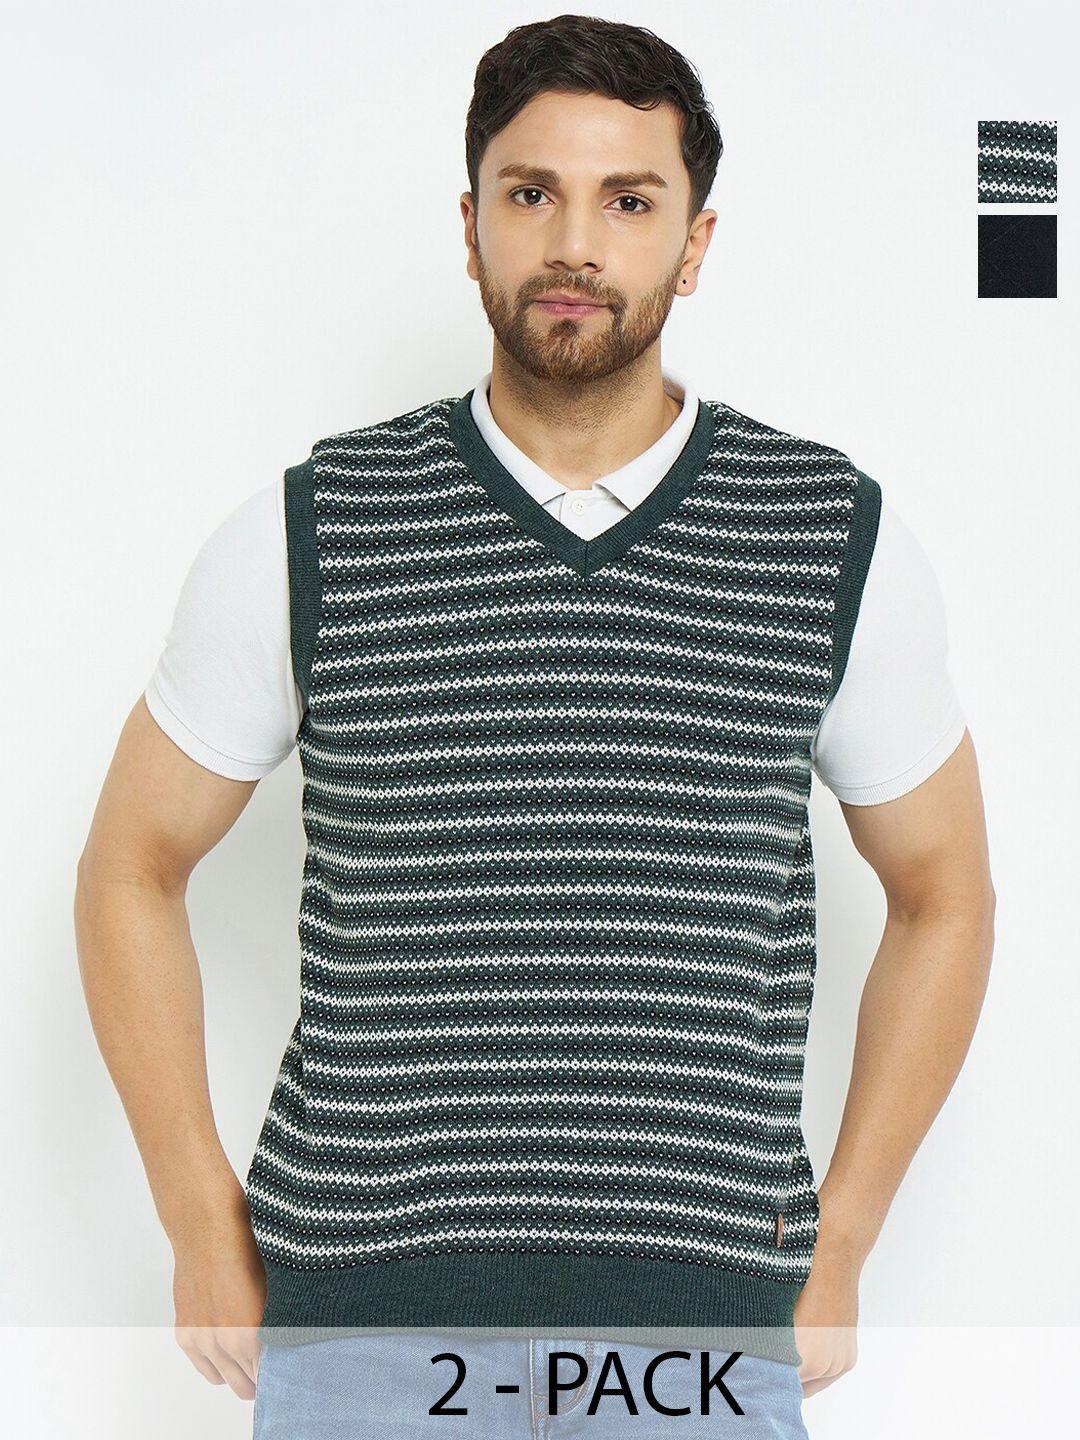 duke pack of 2 striped sleeveless acrylic sweater vest